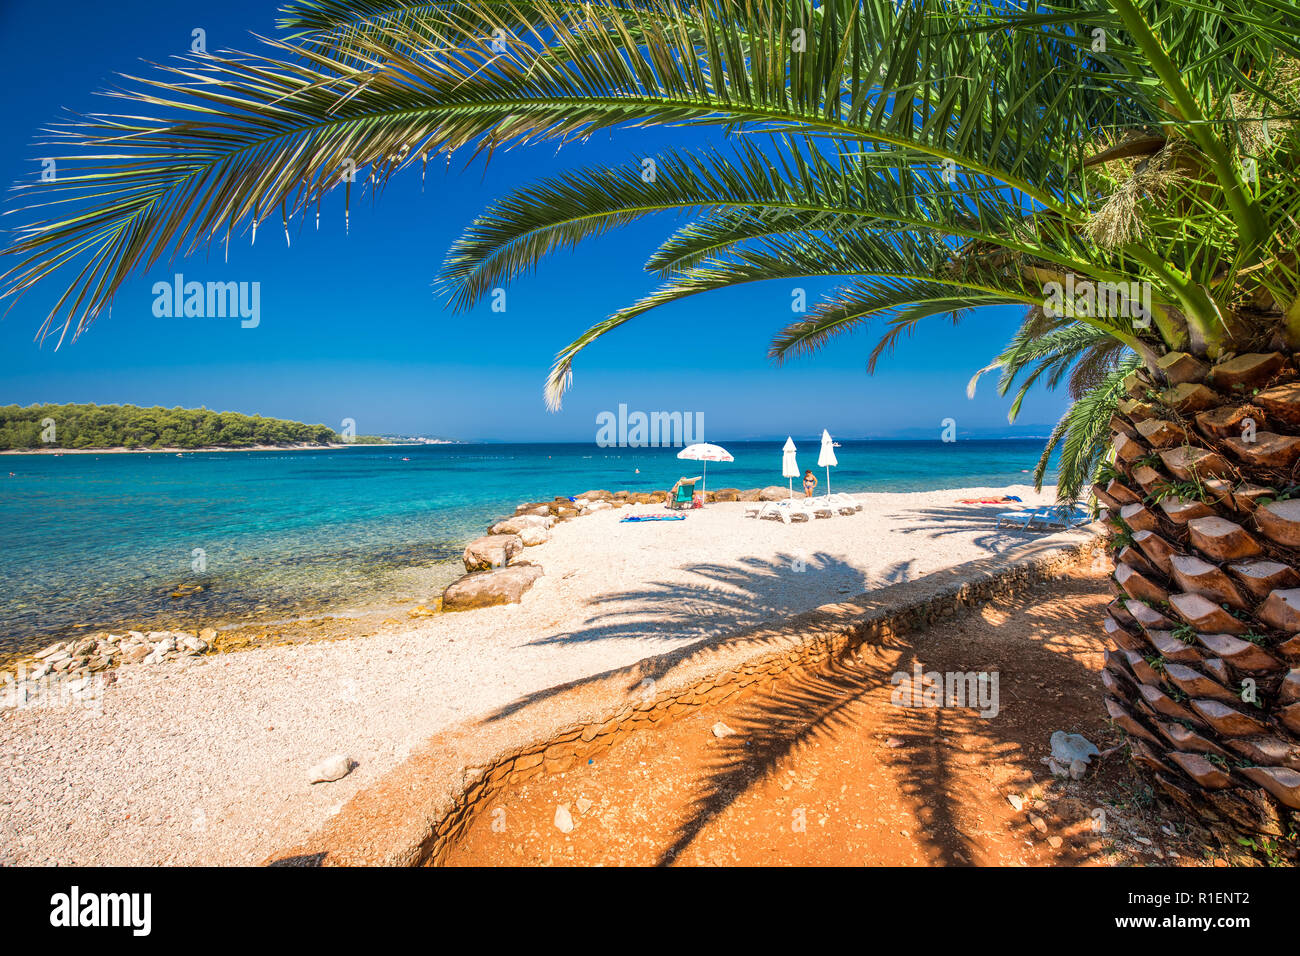 Seaside promenade on Brac island with palm trees and turquoise clear ocean water, Supetar, Brac, Croatia Stock Photo